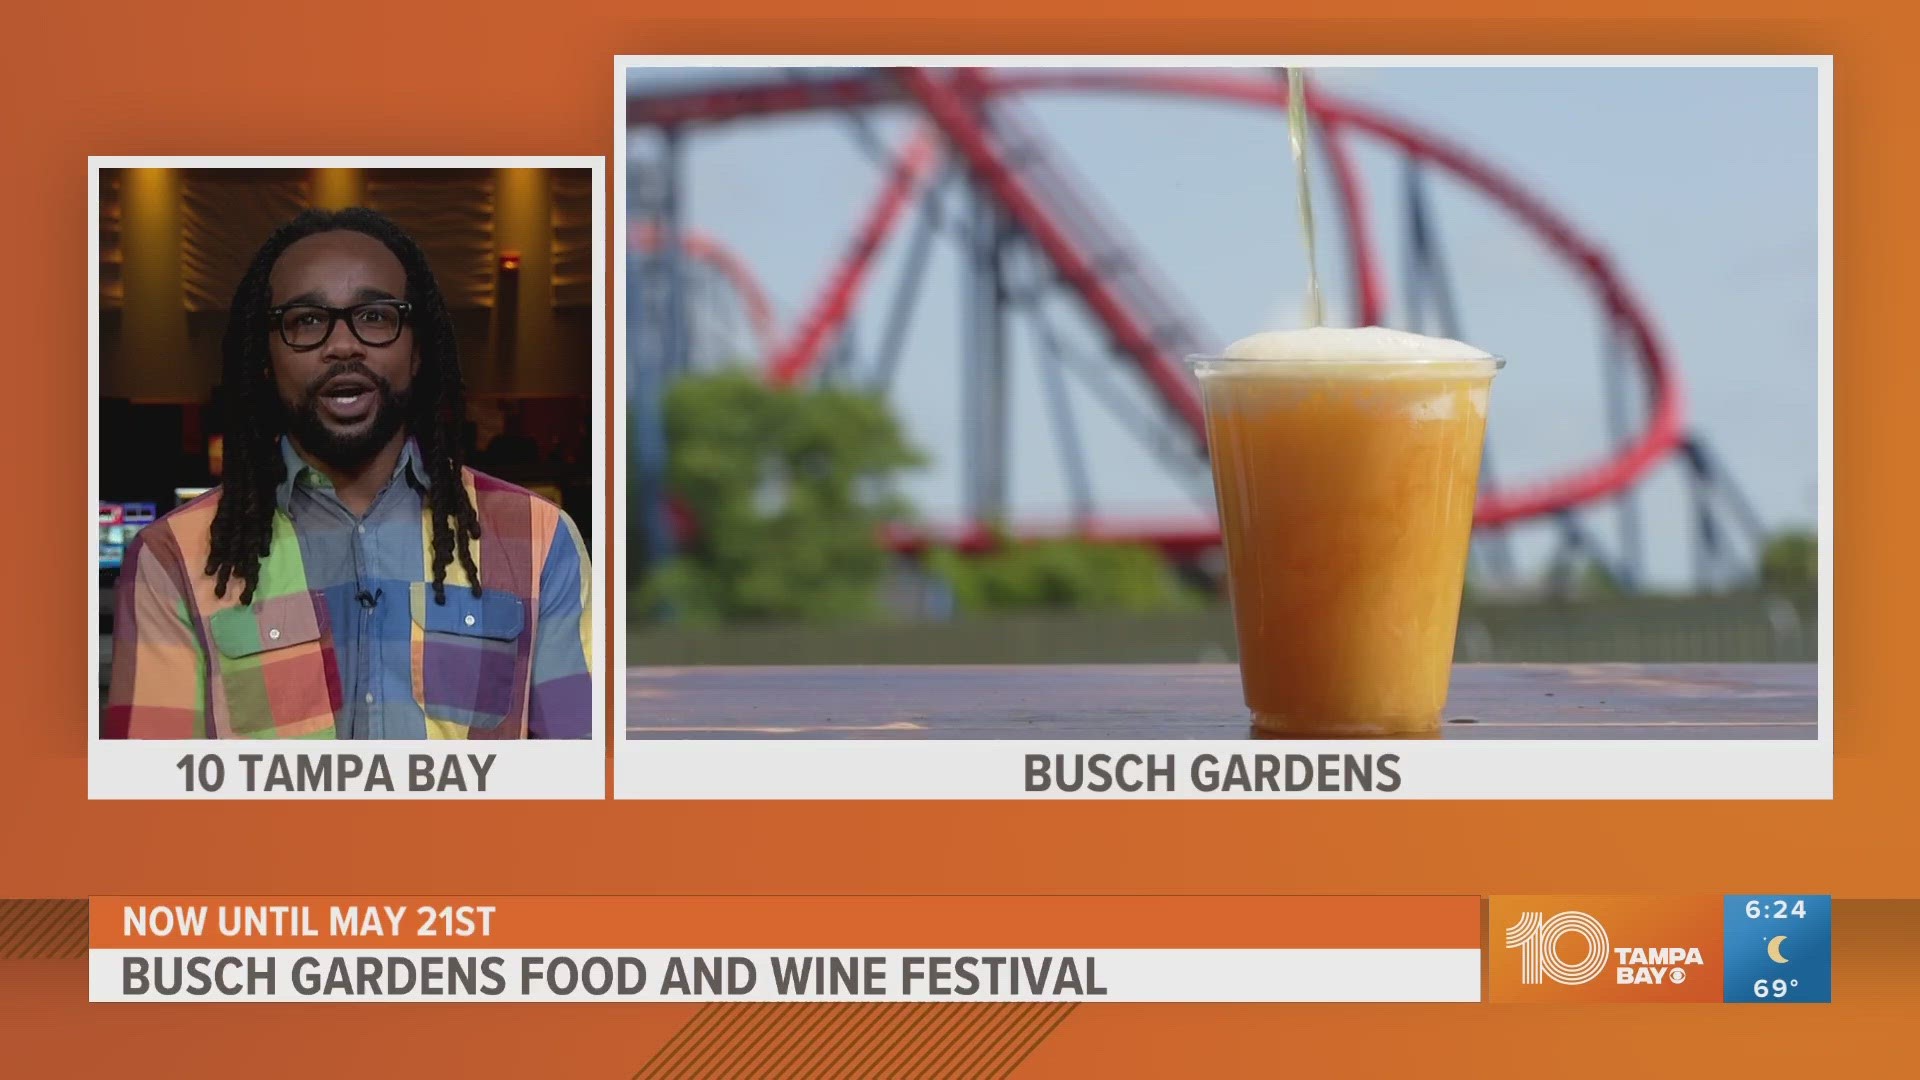 Busch Gardens' Food & Wine Festival runs through May 21.